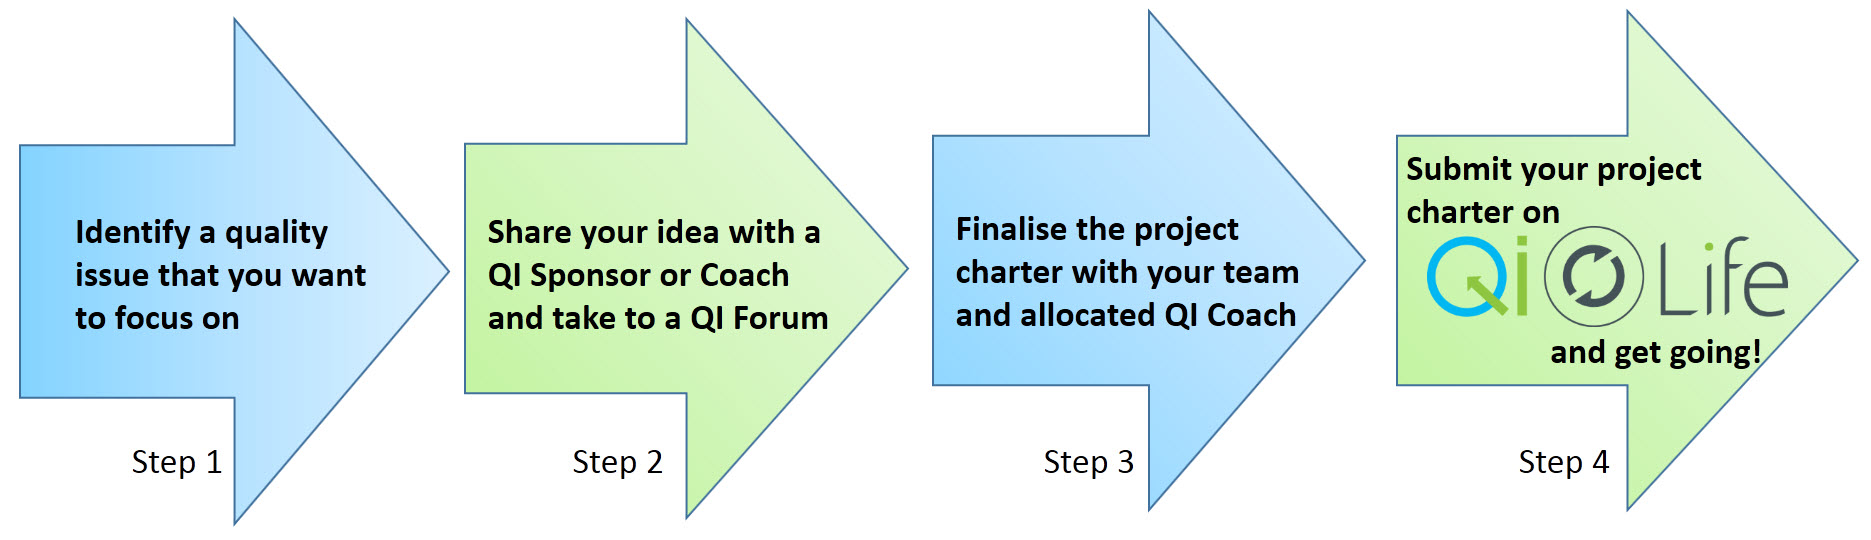 Starting a QI project - 4 step process v3